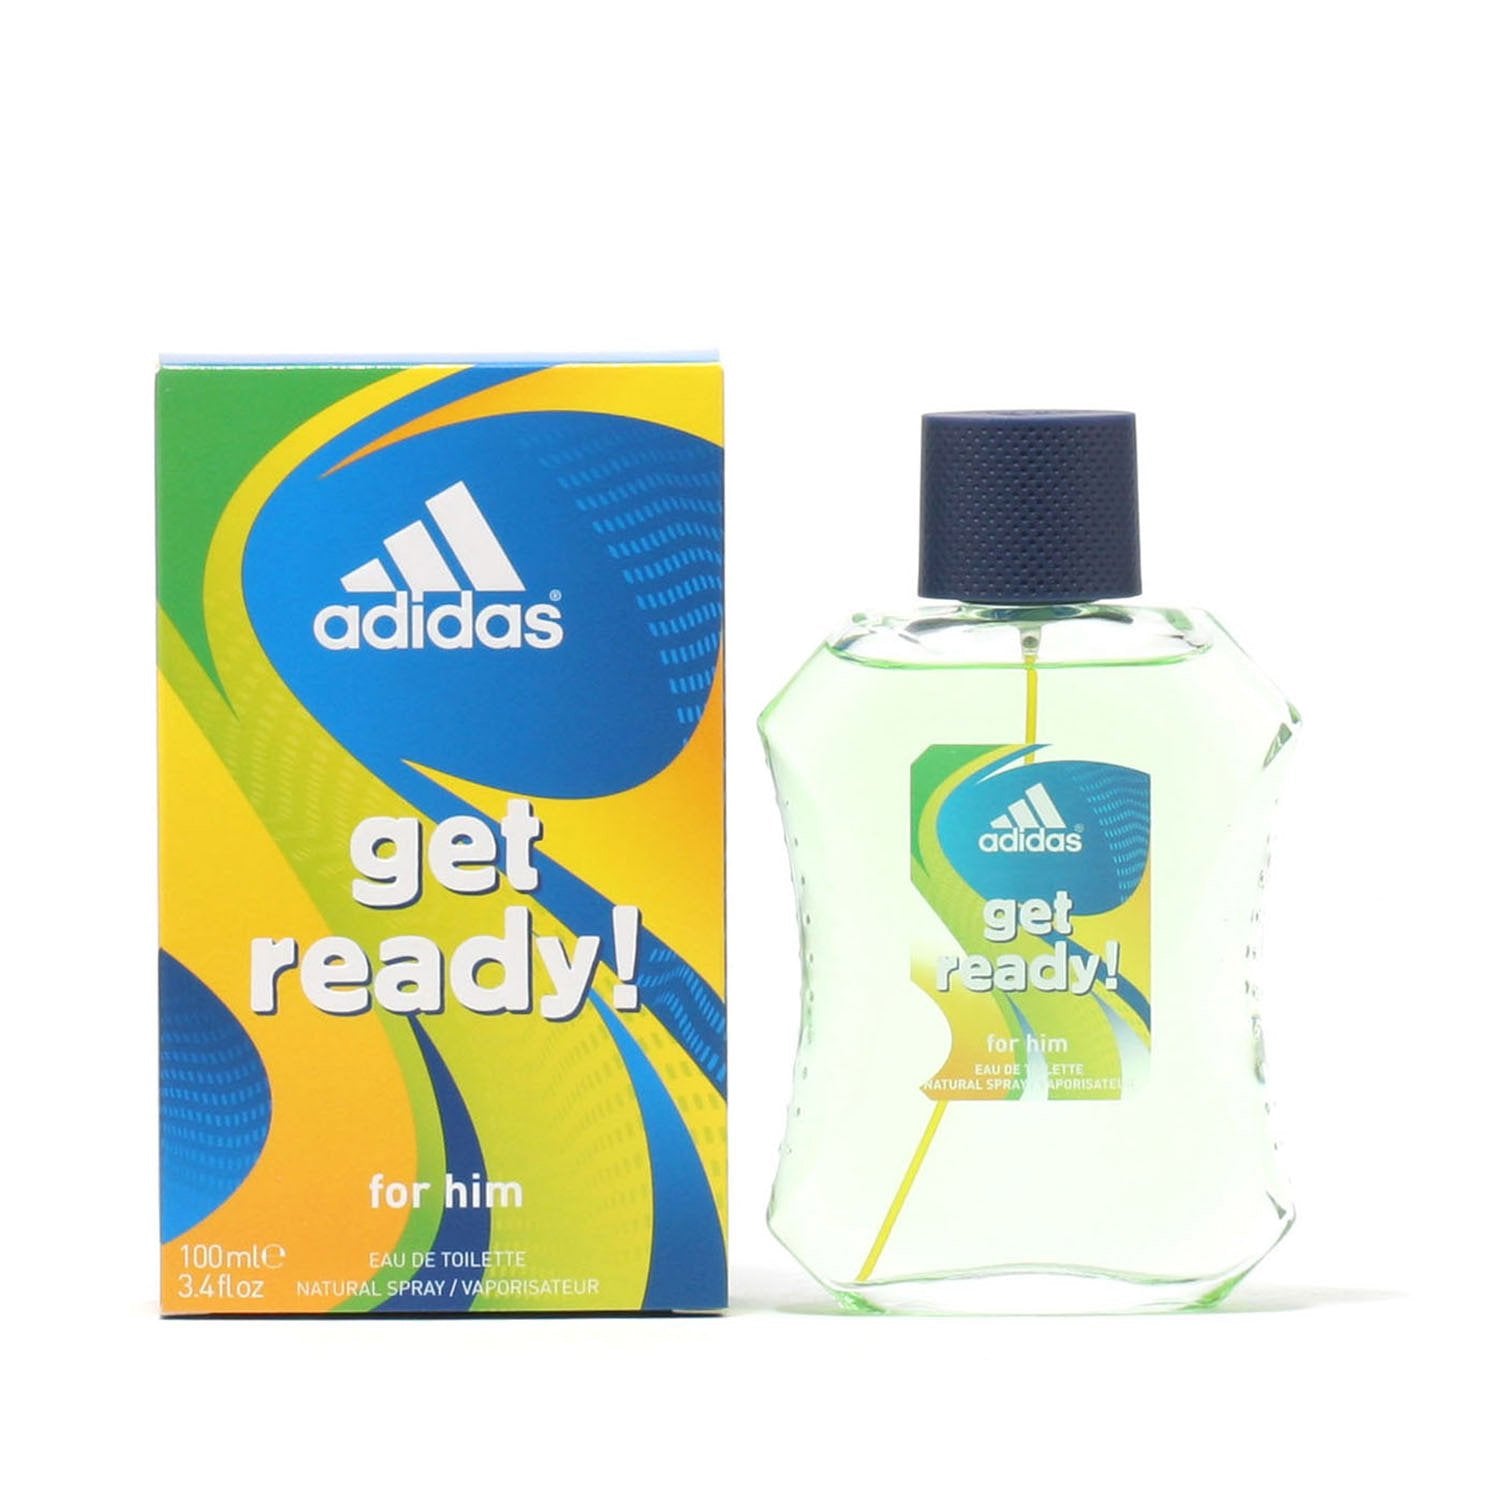 ADIDAS GET READY EAU DE TOILETTE SPRAY, 3.4 OZ – Fragrance Room